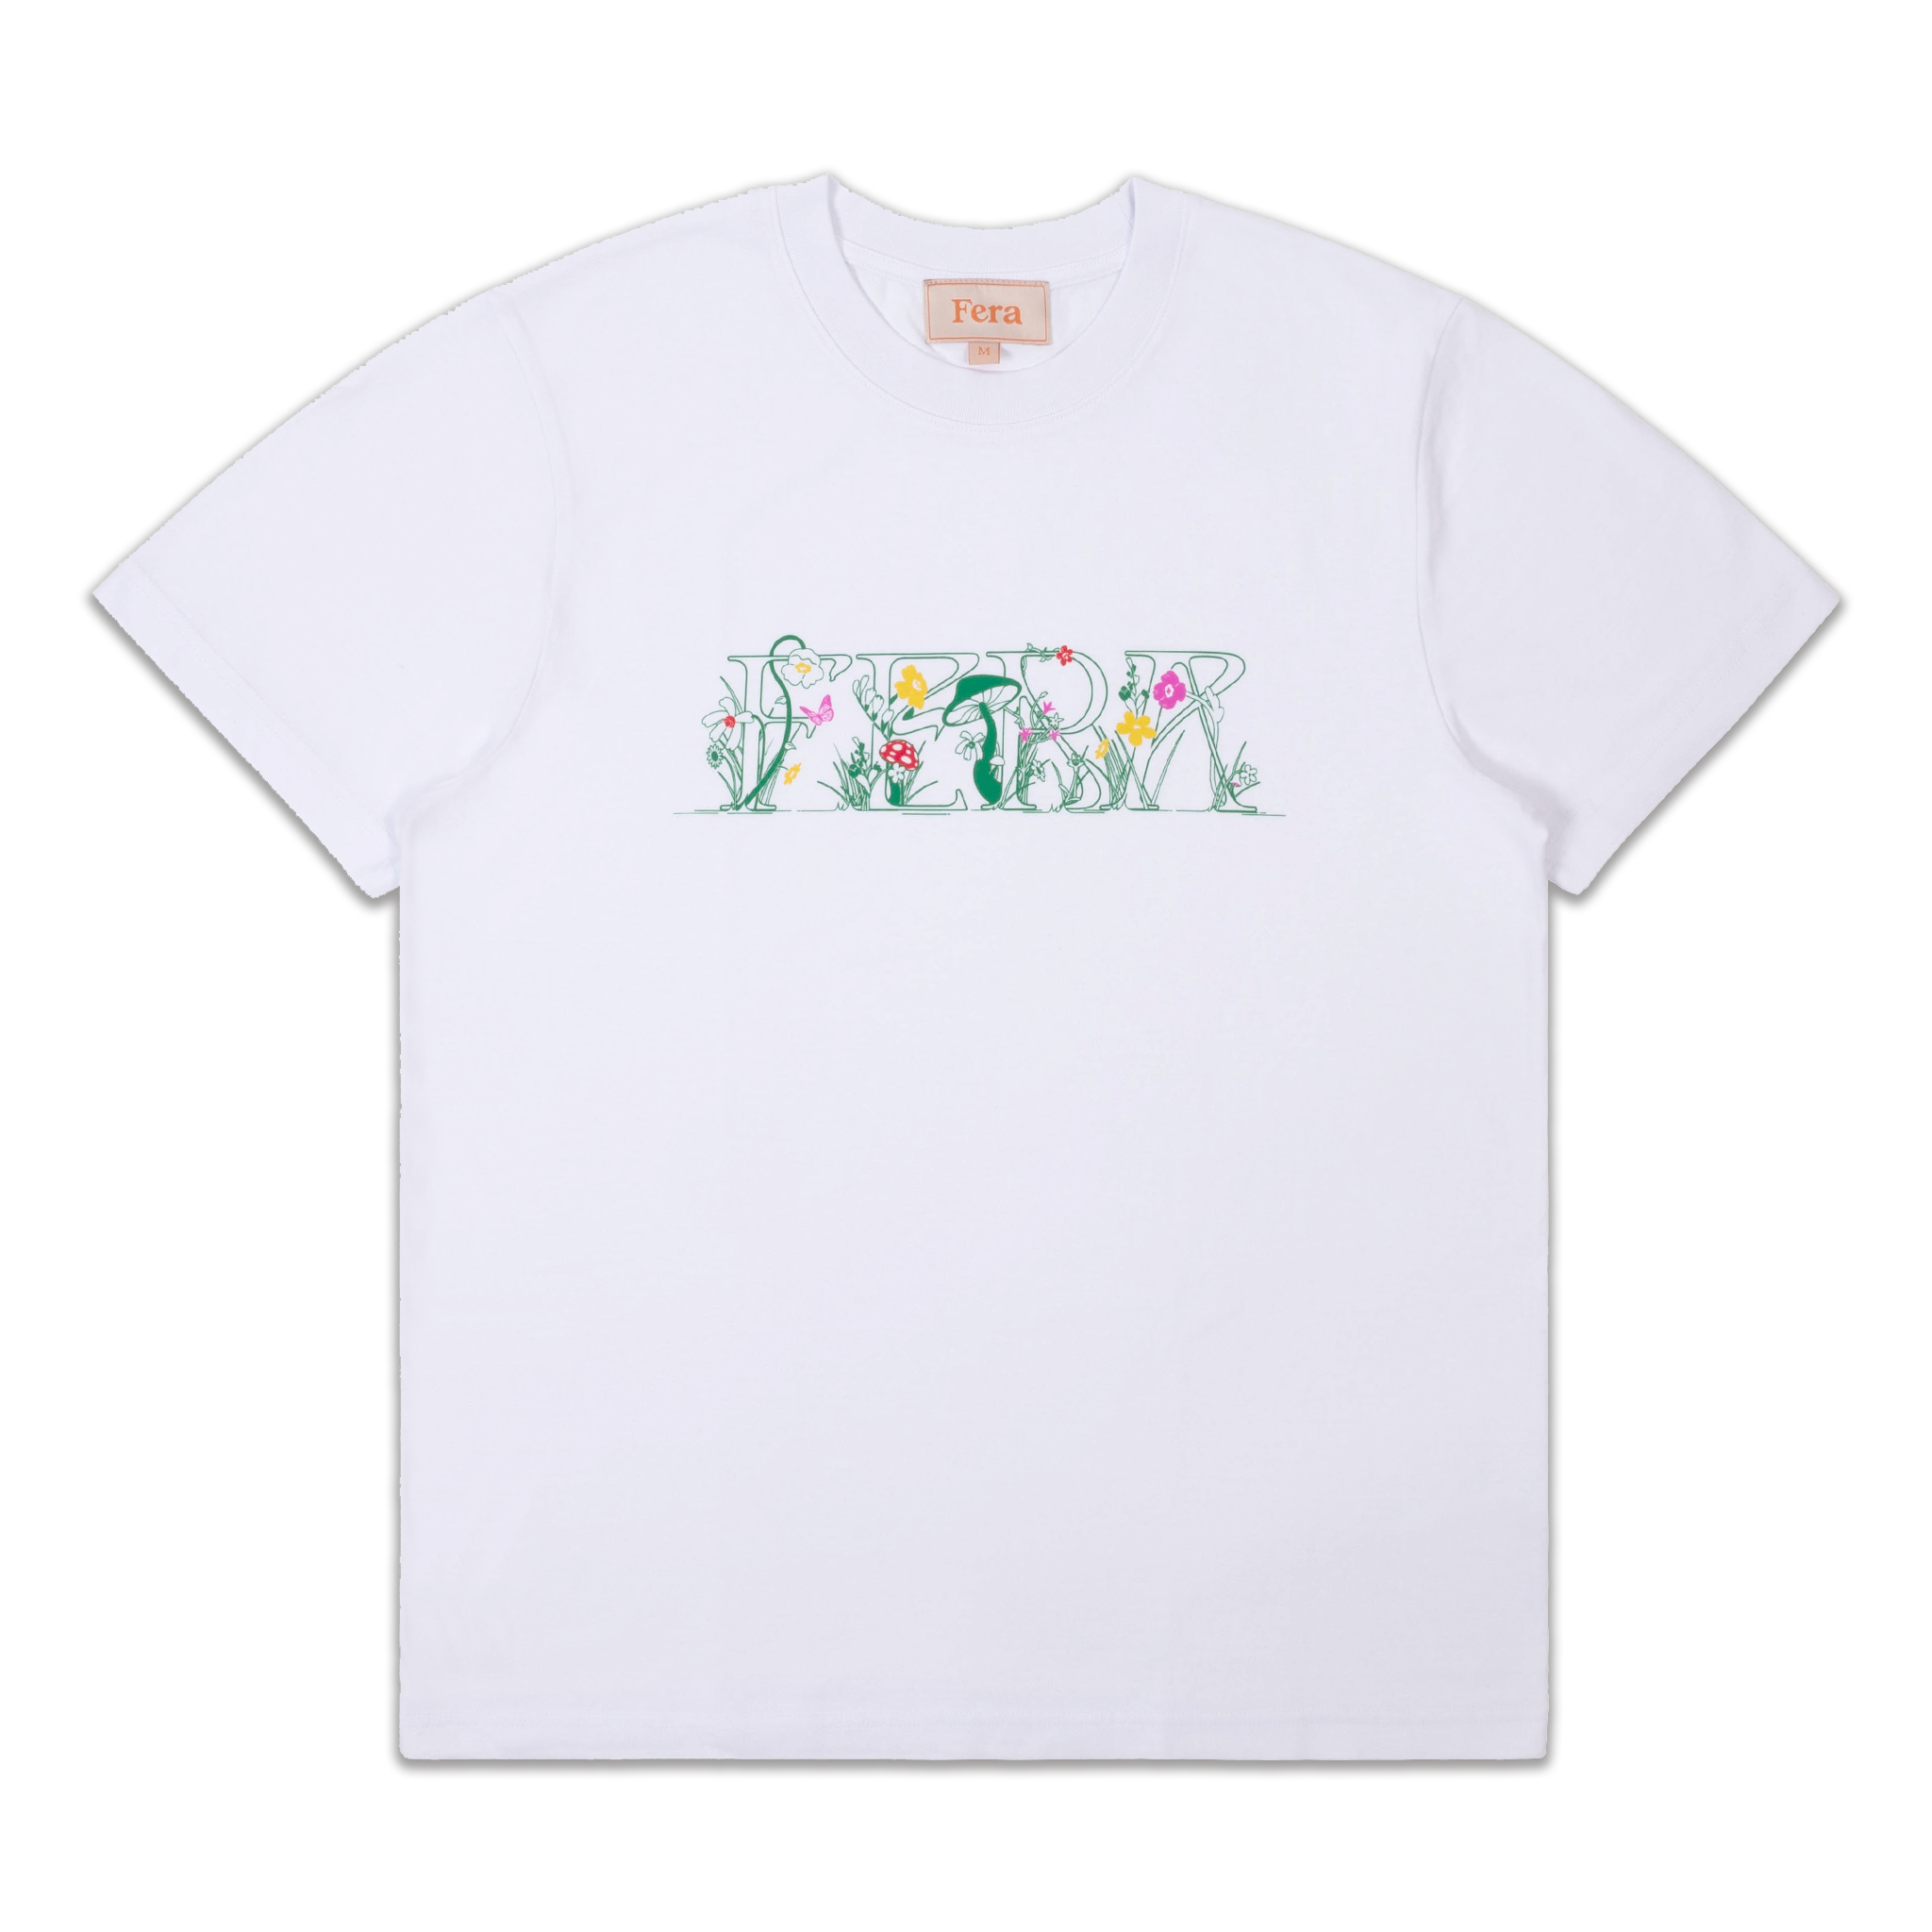 Rewilded T-Shirt - Fera